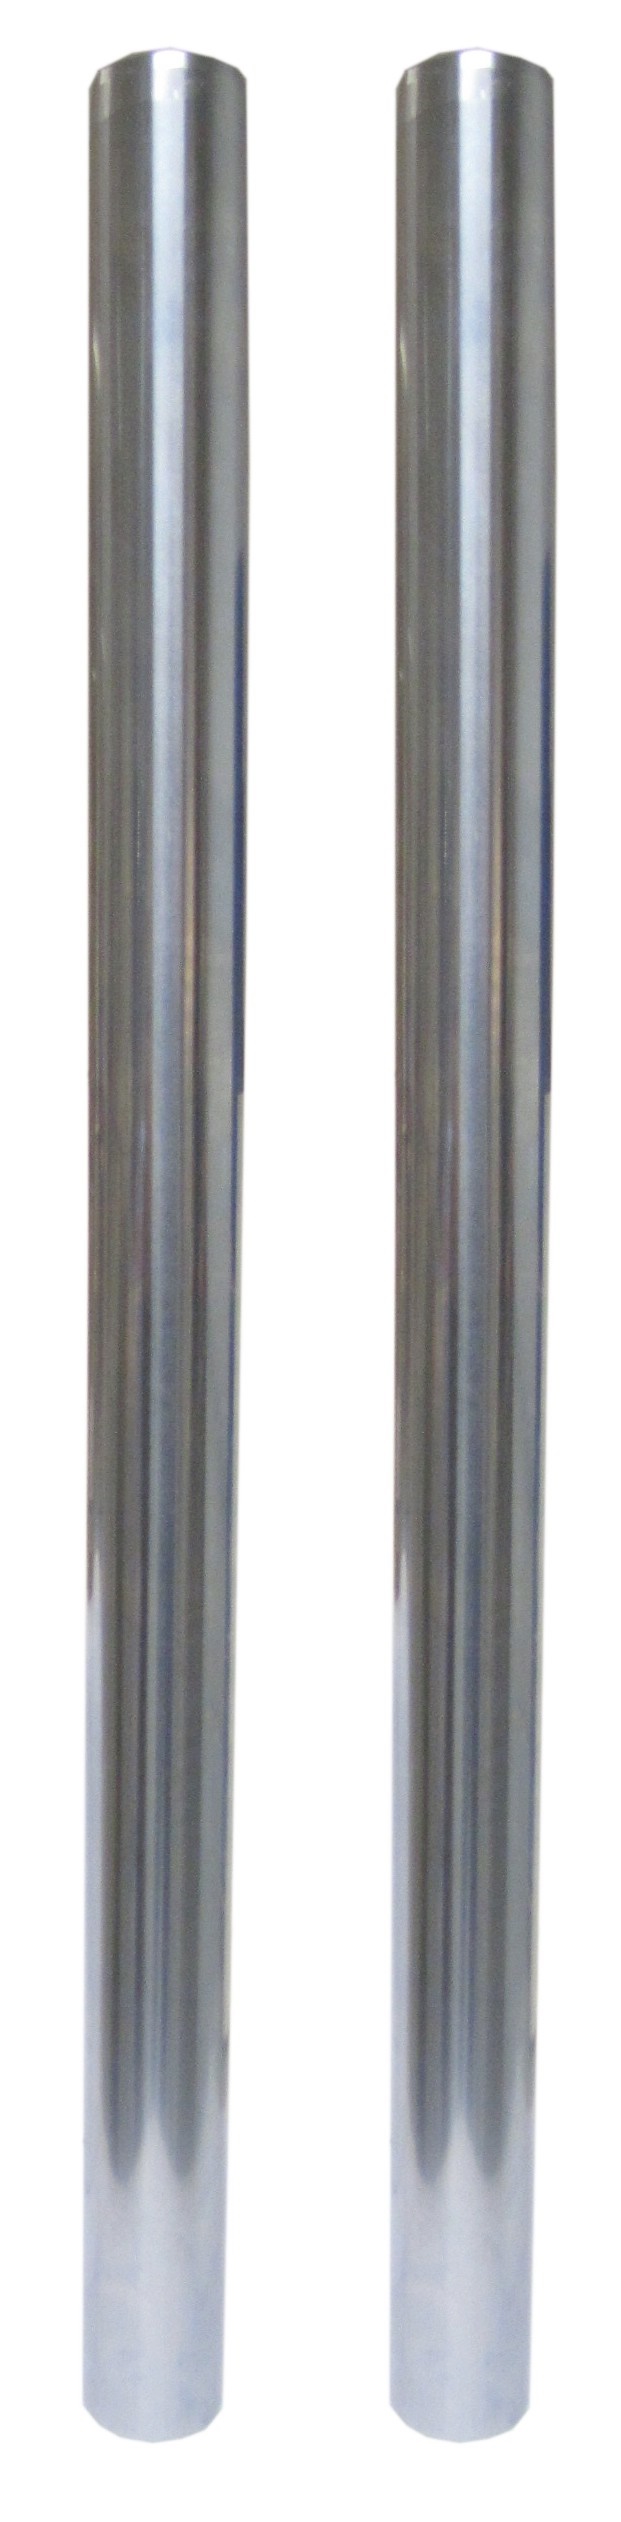 Pair Hard Chrome Fork Stanchions Tubes 560mm X 36mm Kawasaki H2 KH750 1972-1975